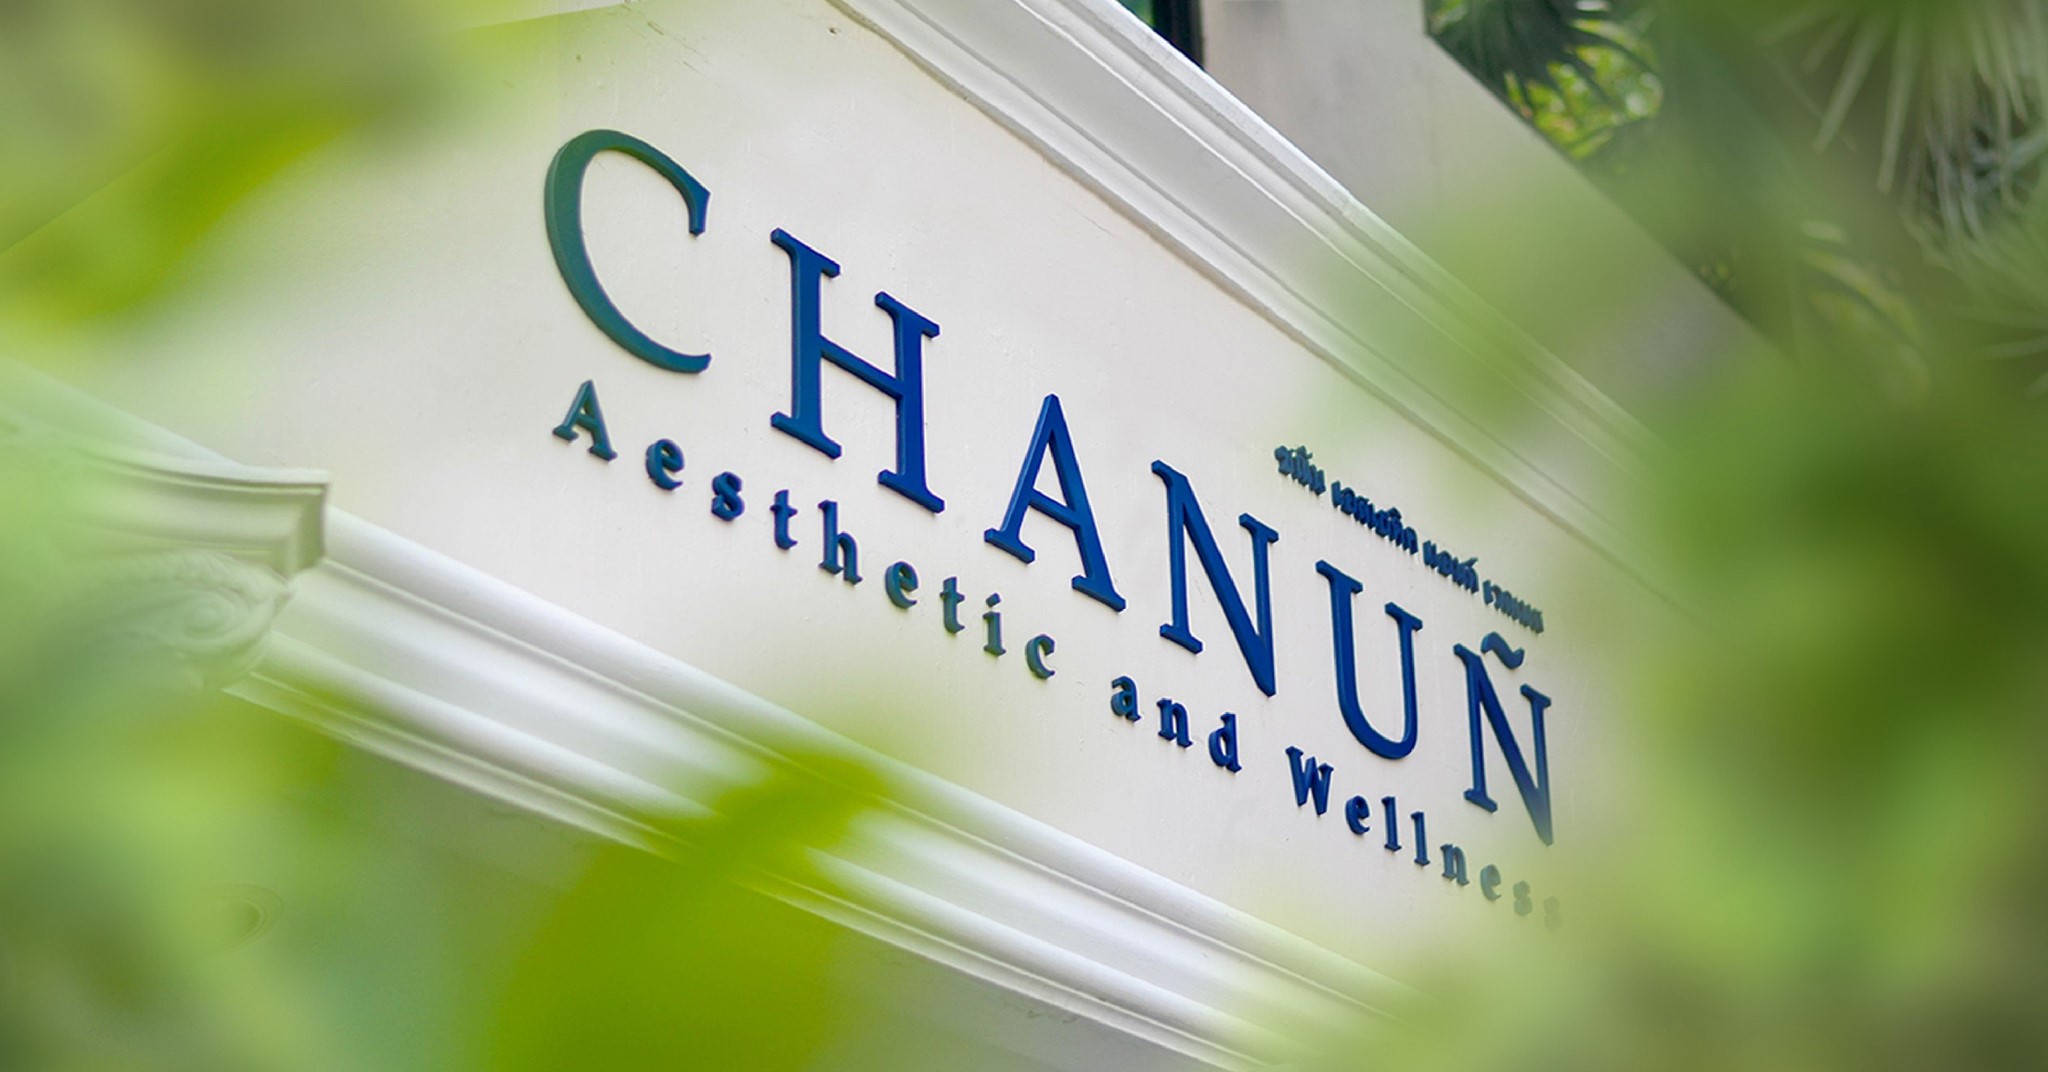 Chanun Aesthetic Wellness & Surgery